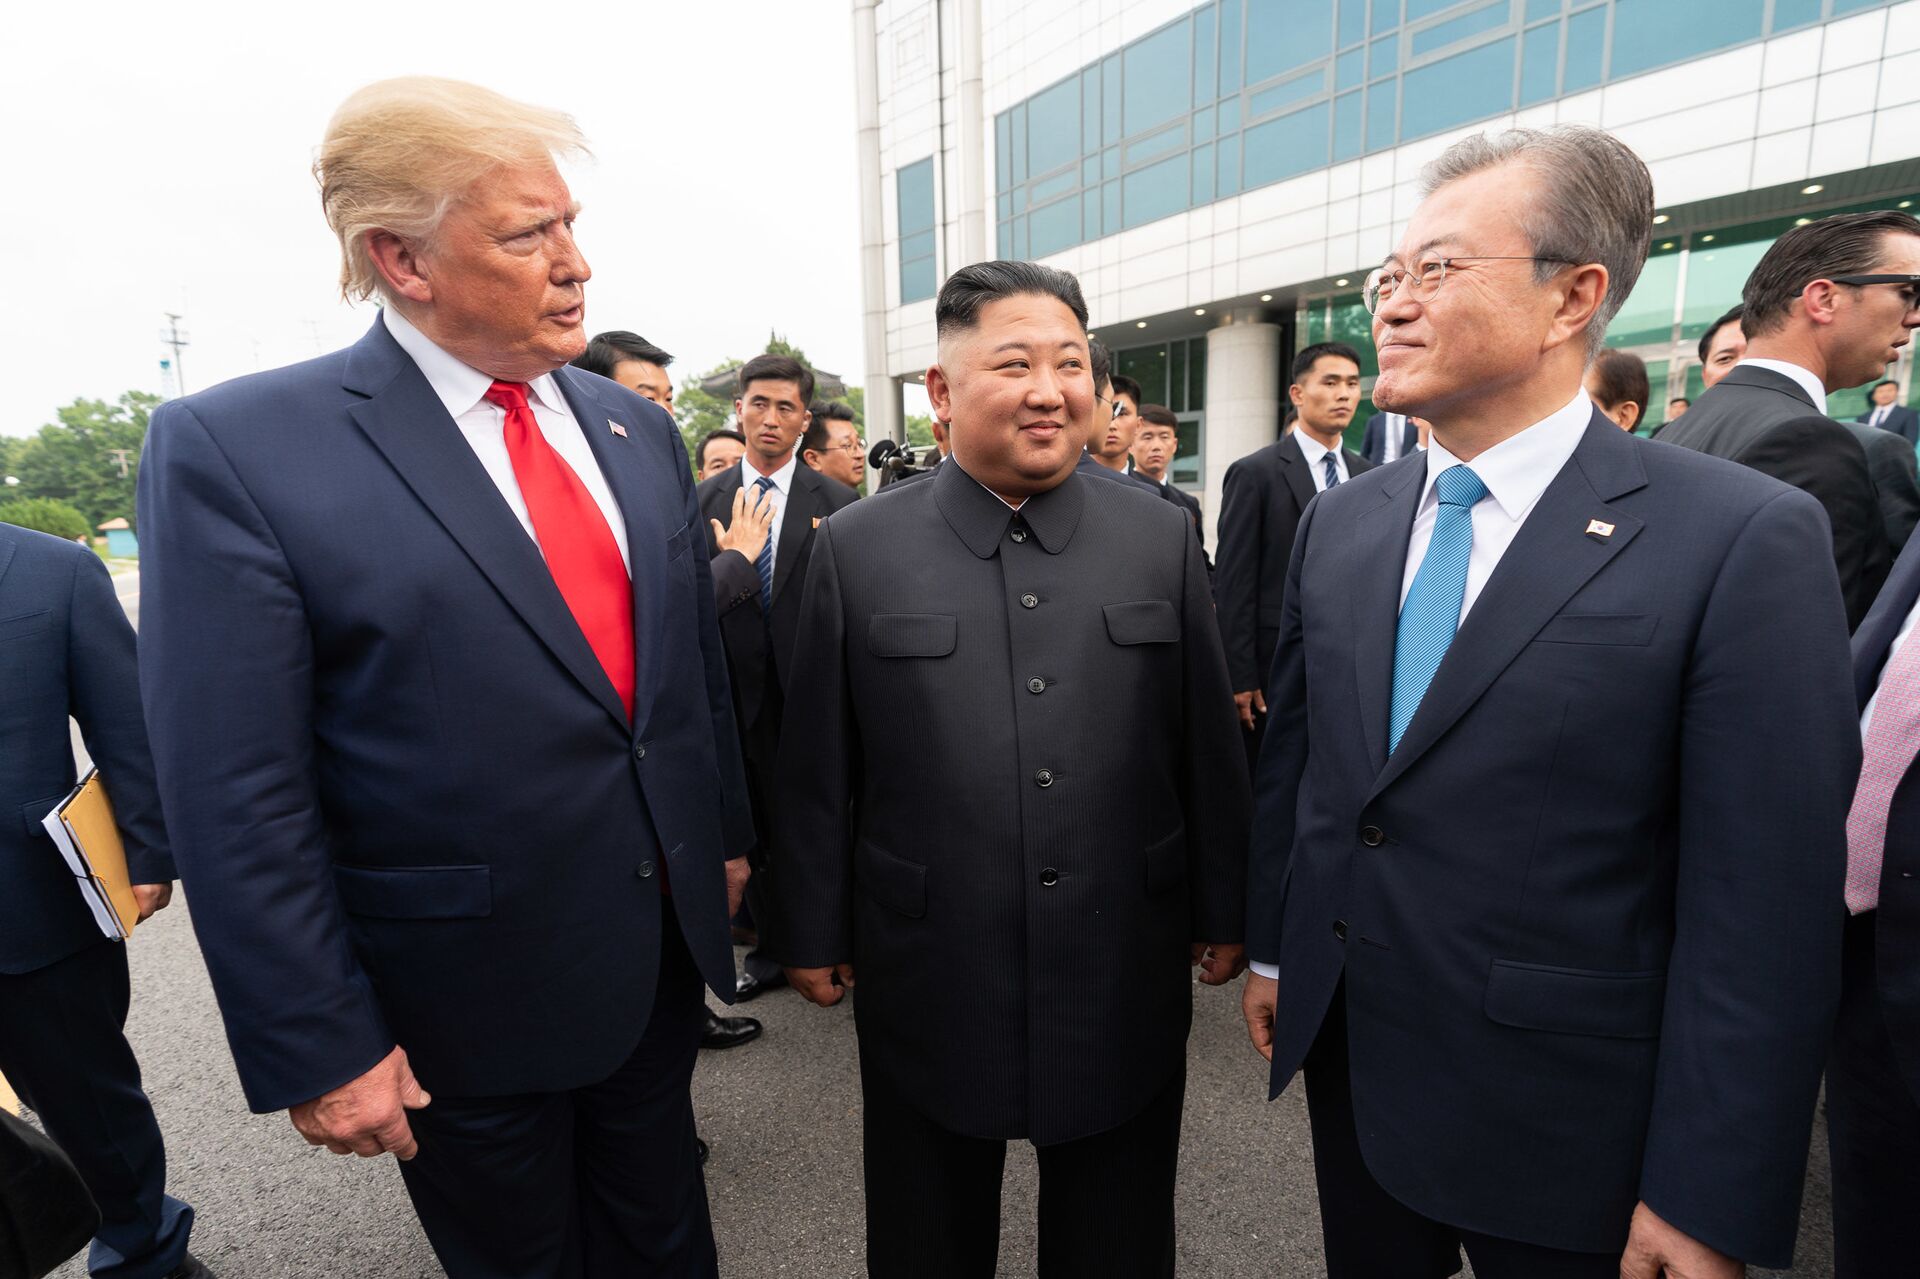 Biden Says He Won’t Meet With DPRK’s Kim Without Prior Denuclearization Pledge - Sputnik International, 1920, 22.05.2021